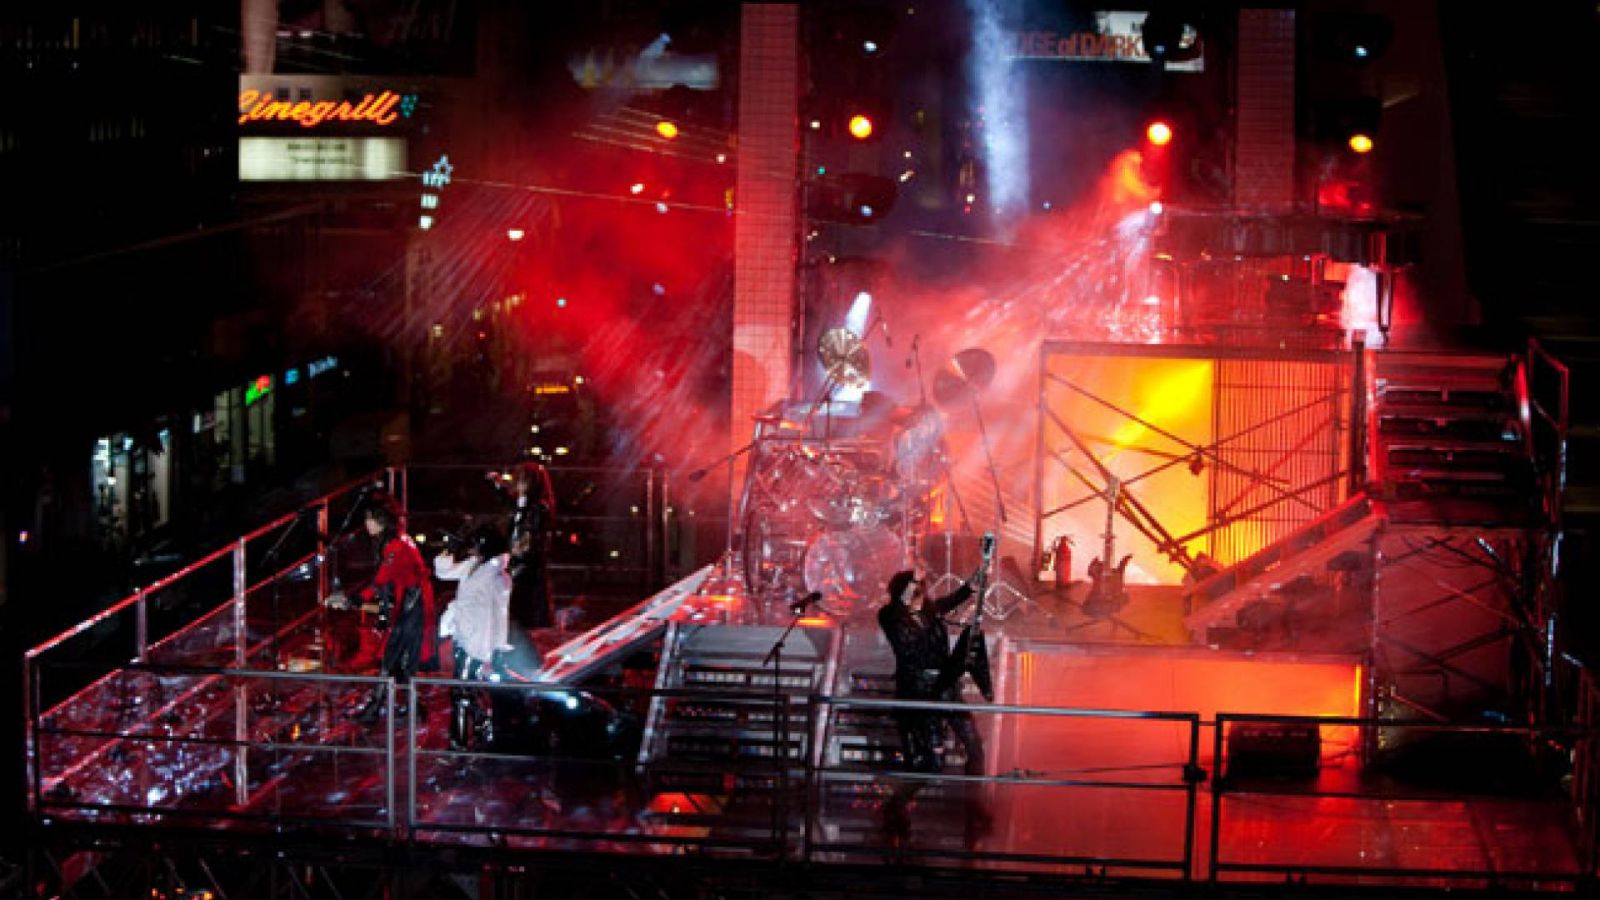 X JAPAN снимаются в Голливуде © YSK Entertainment, Inc. 2010. All Rights Reserved